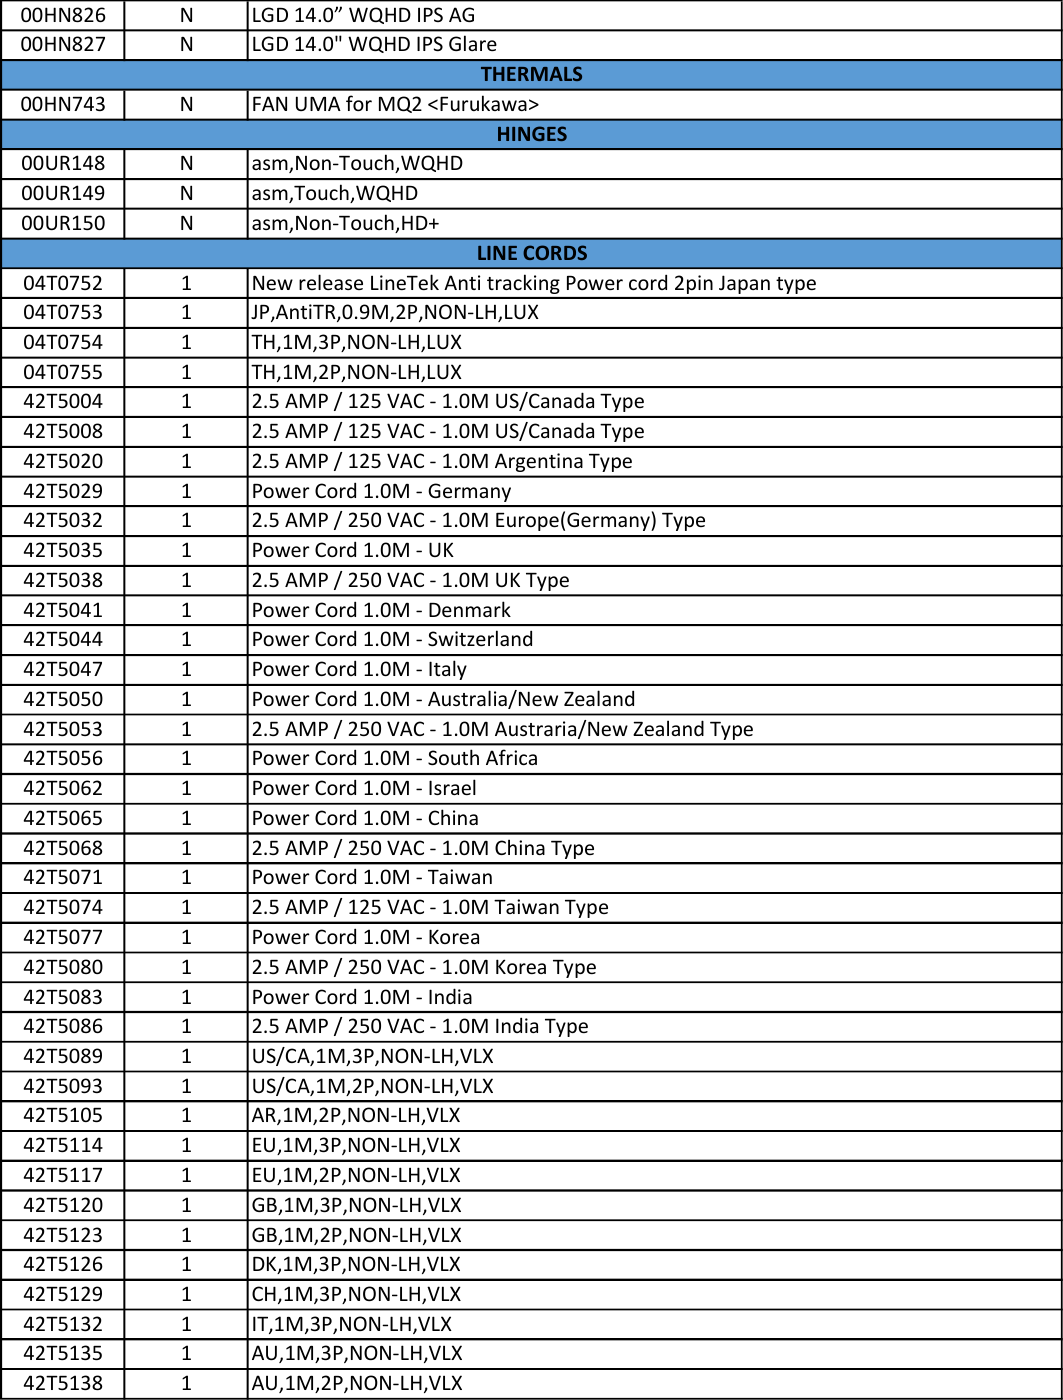 Page 3 of 11 - Lenovo X1Carbon 3 Frubom 20170222 X1 Carbon Gen FRU BOM 20170222x User Manual 3rd (Type 20BS, 20BT) Laptop (Think Pad) - Type 20BT